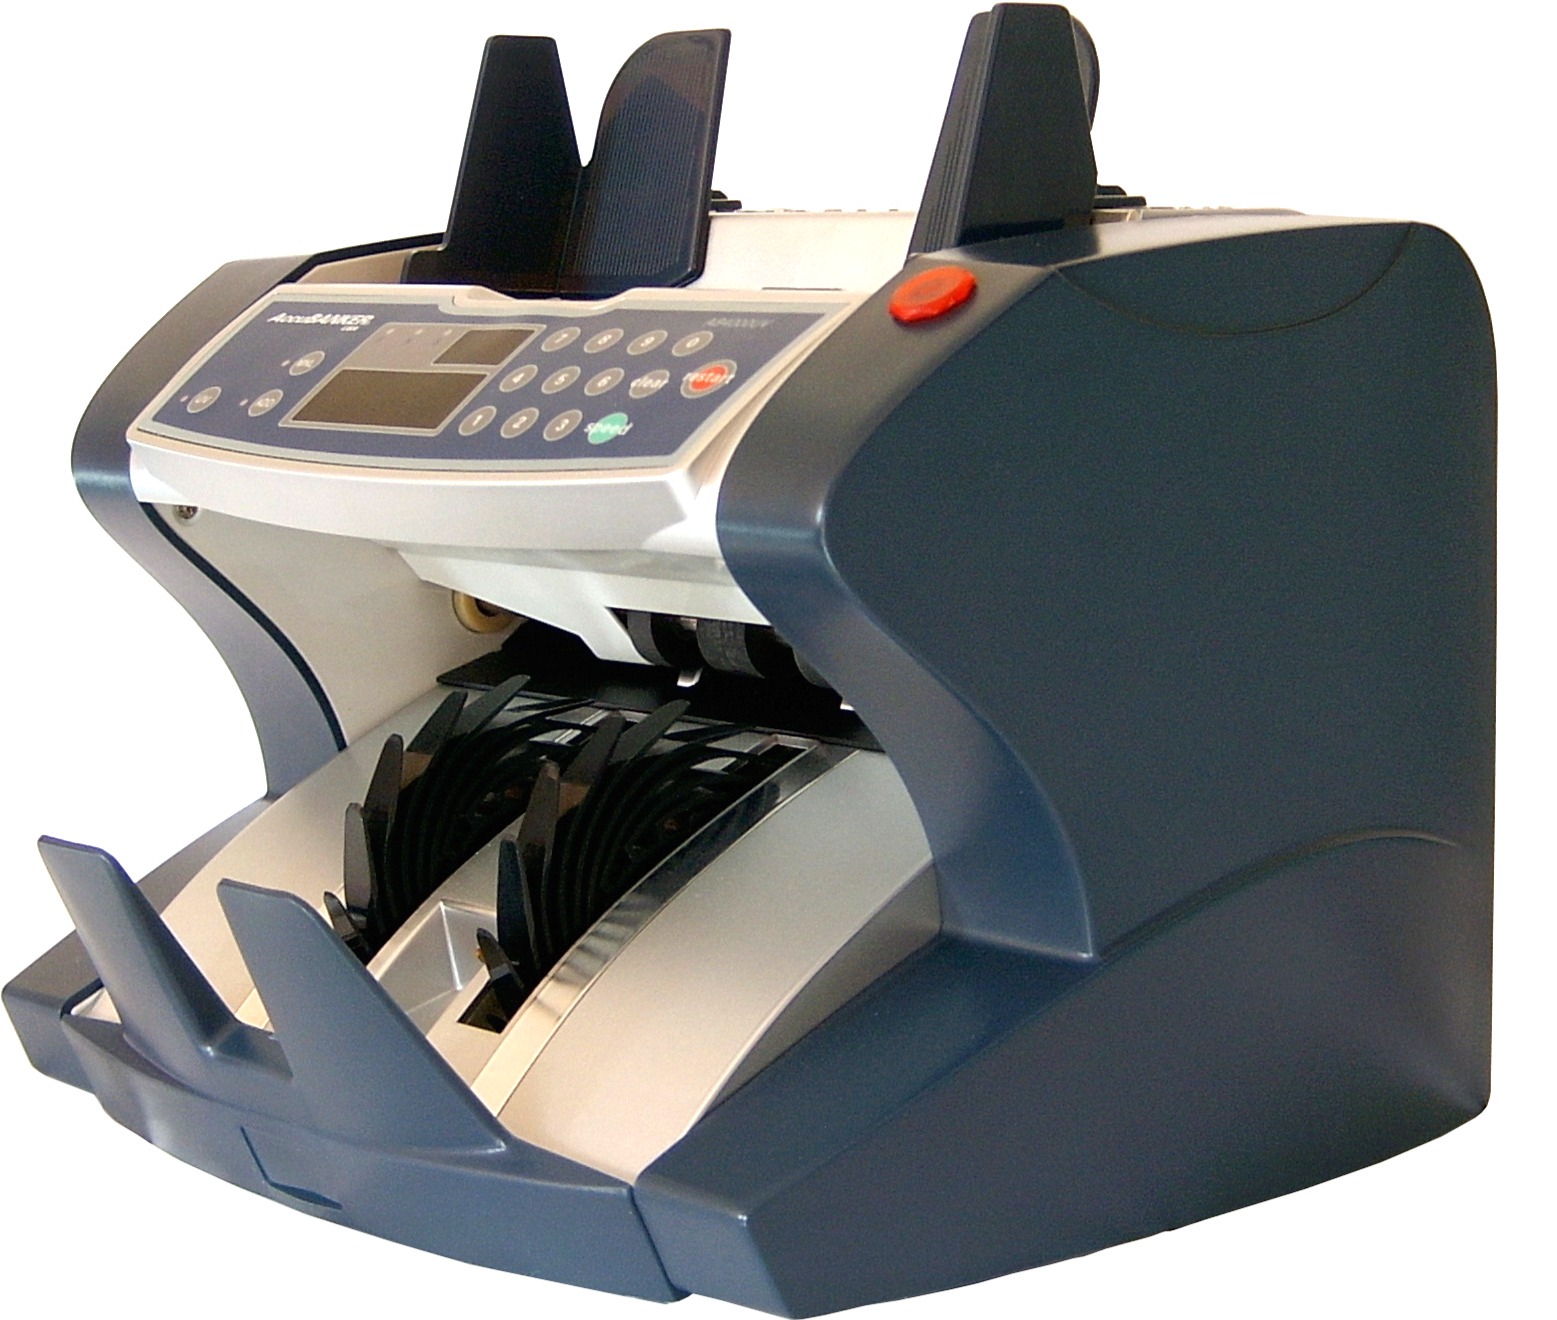 Počítačka bankovek AB-4000UV AccuBanker s UV detekcí